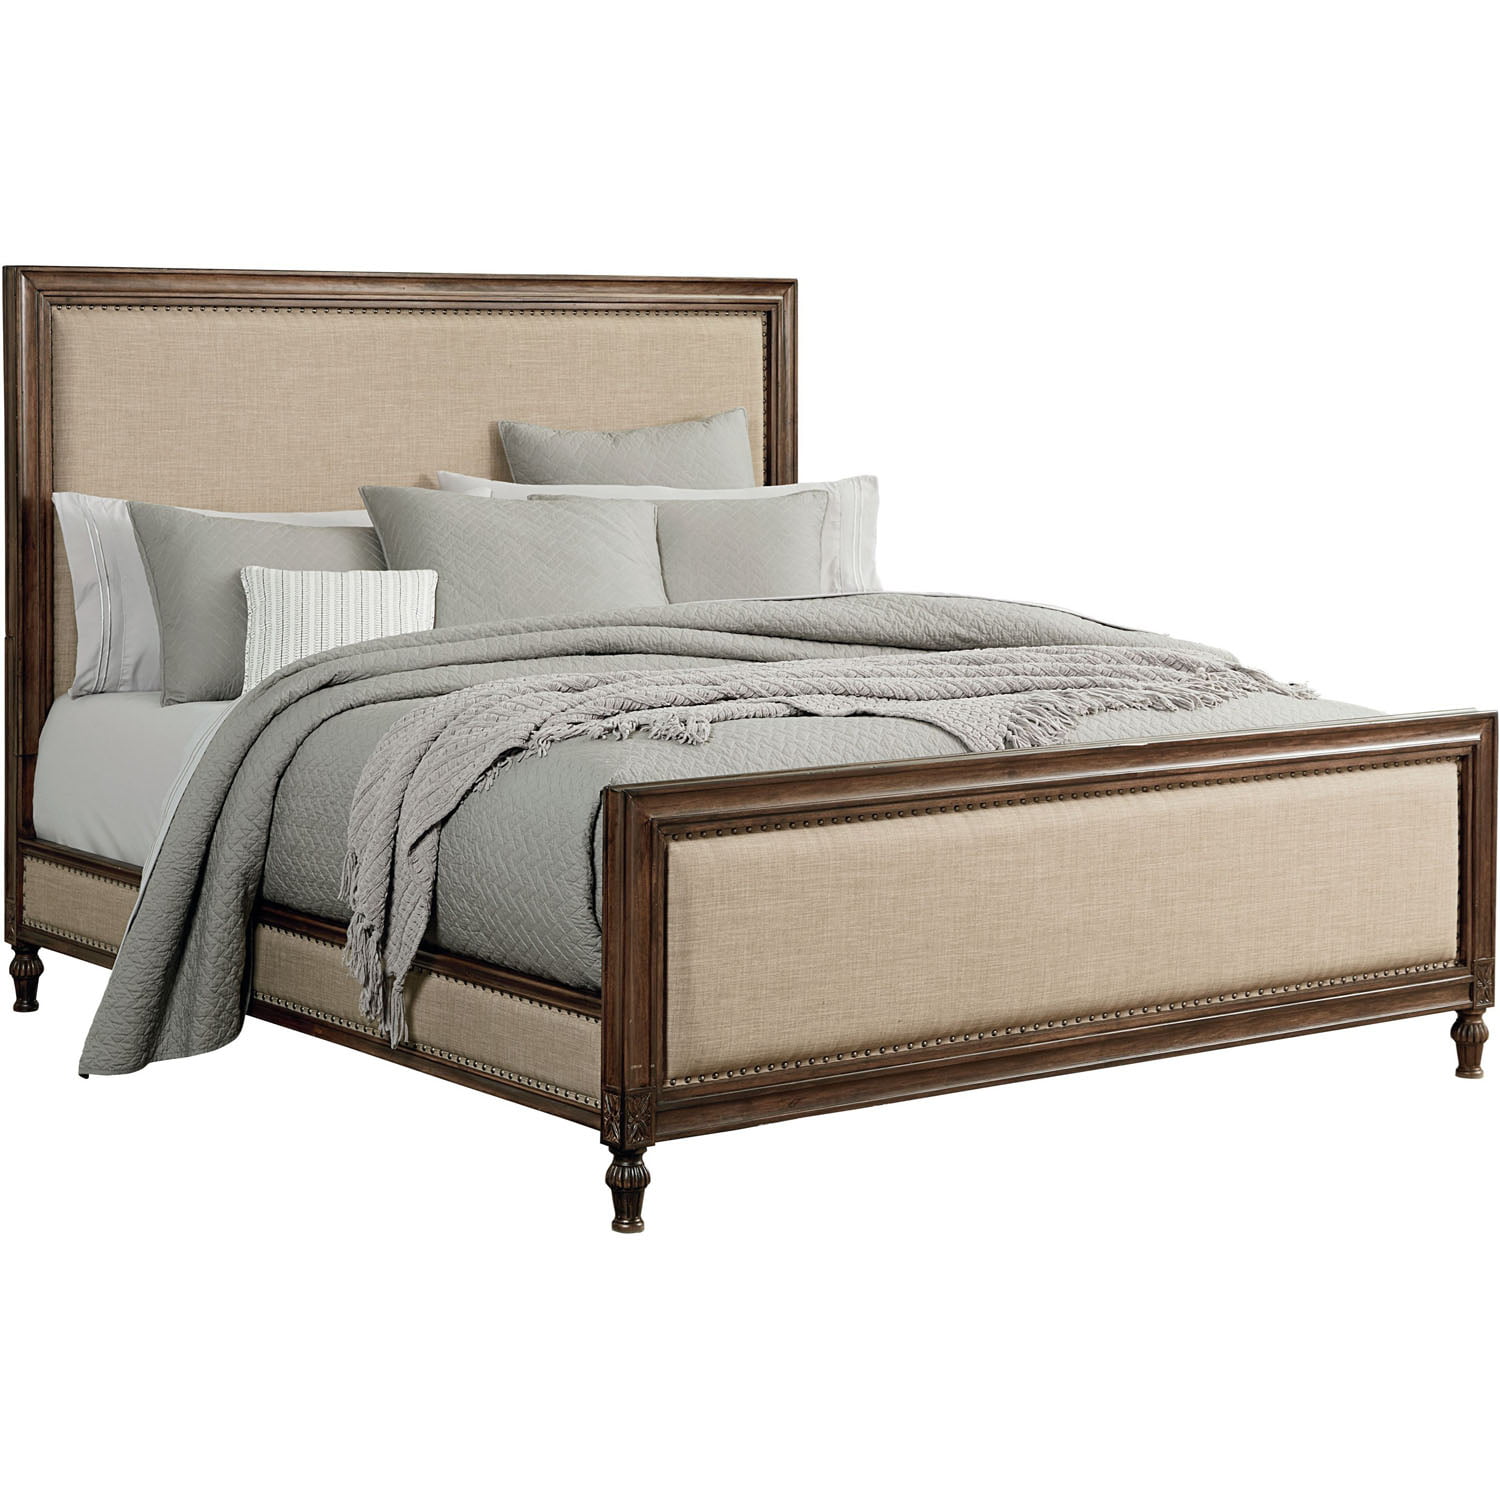 Cambridge Lexington Upholstered Queen-Size Bed Frame - Walmart.com